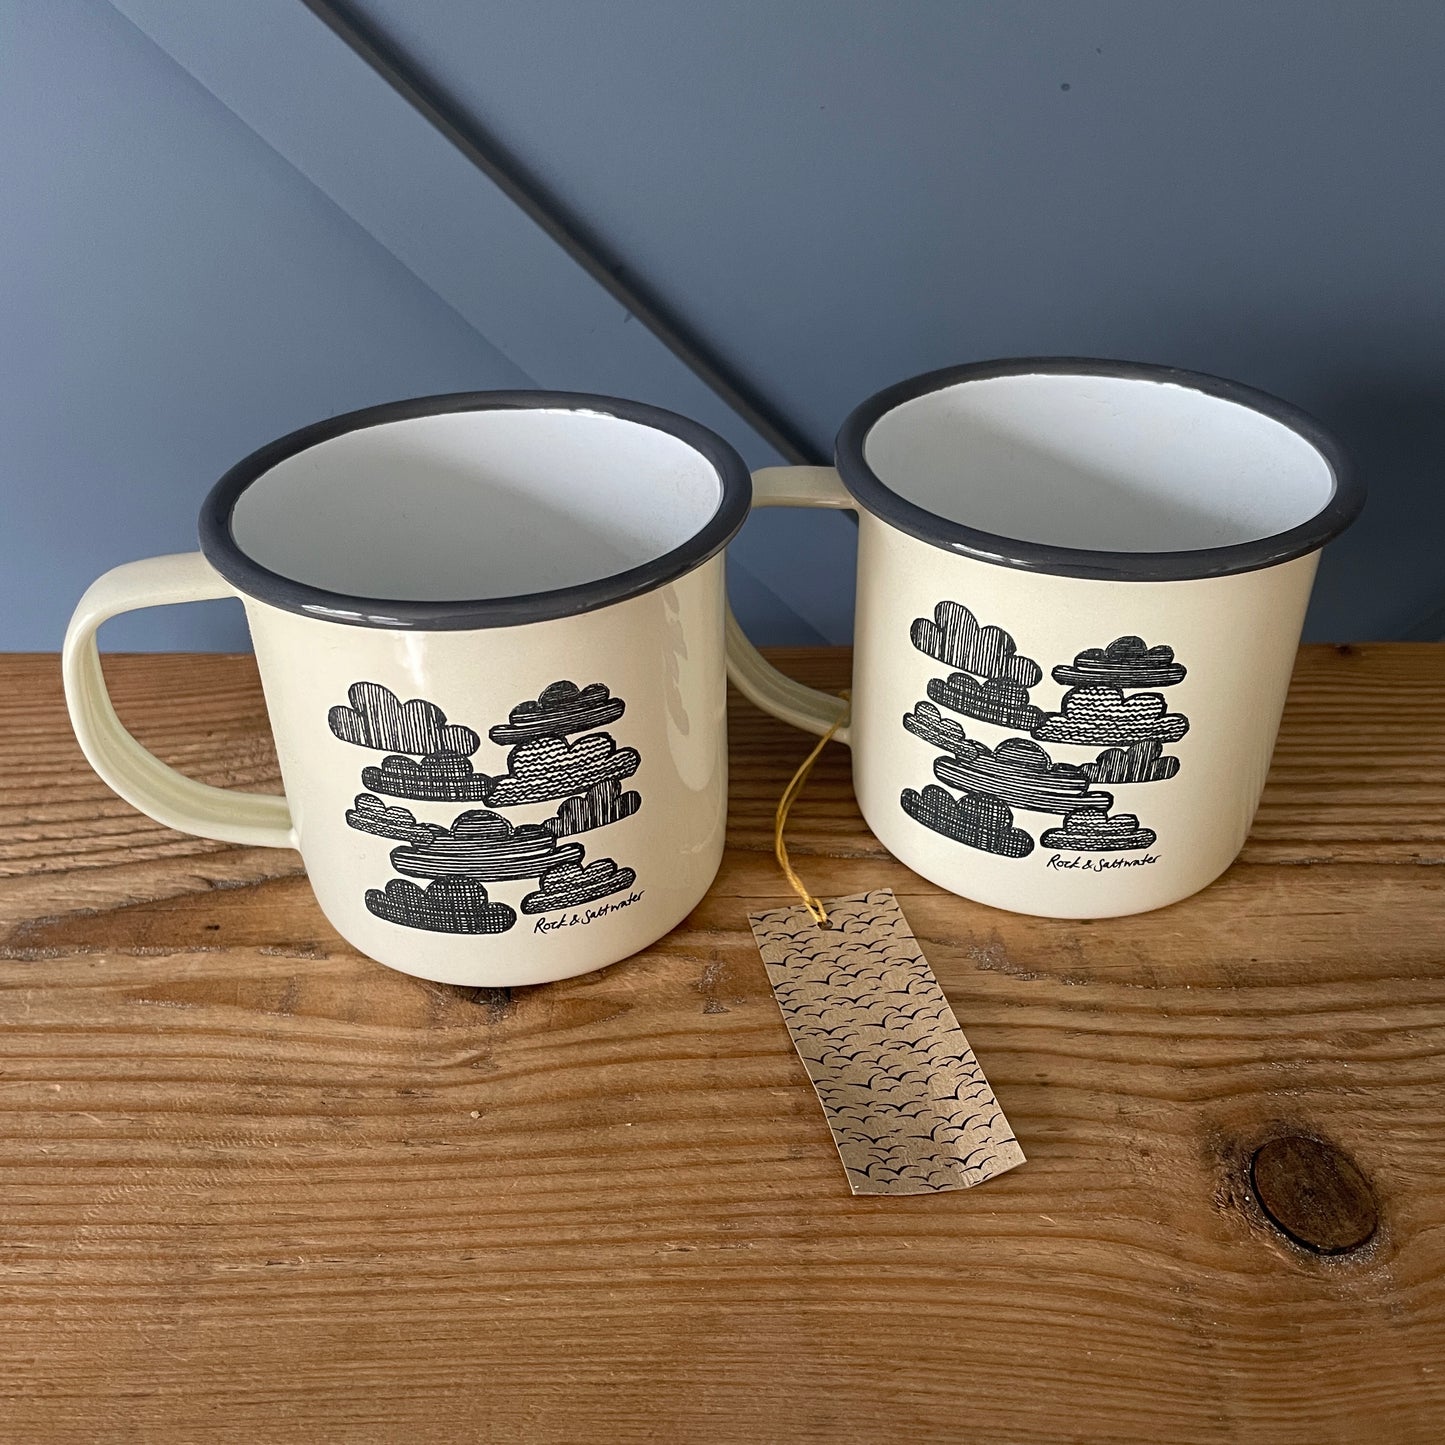 Cream and grey enamel mugs